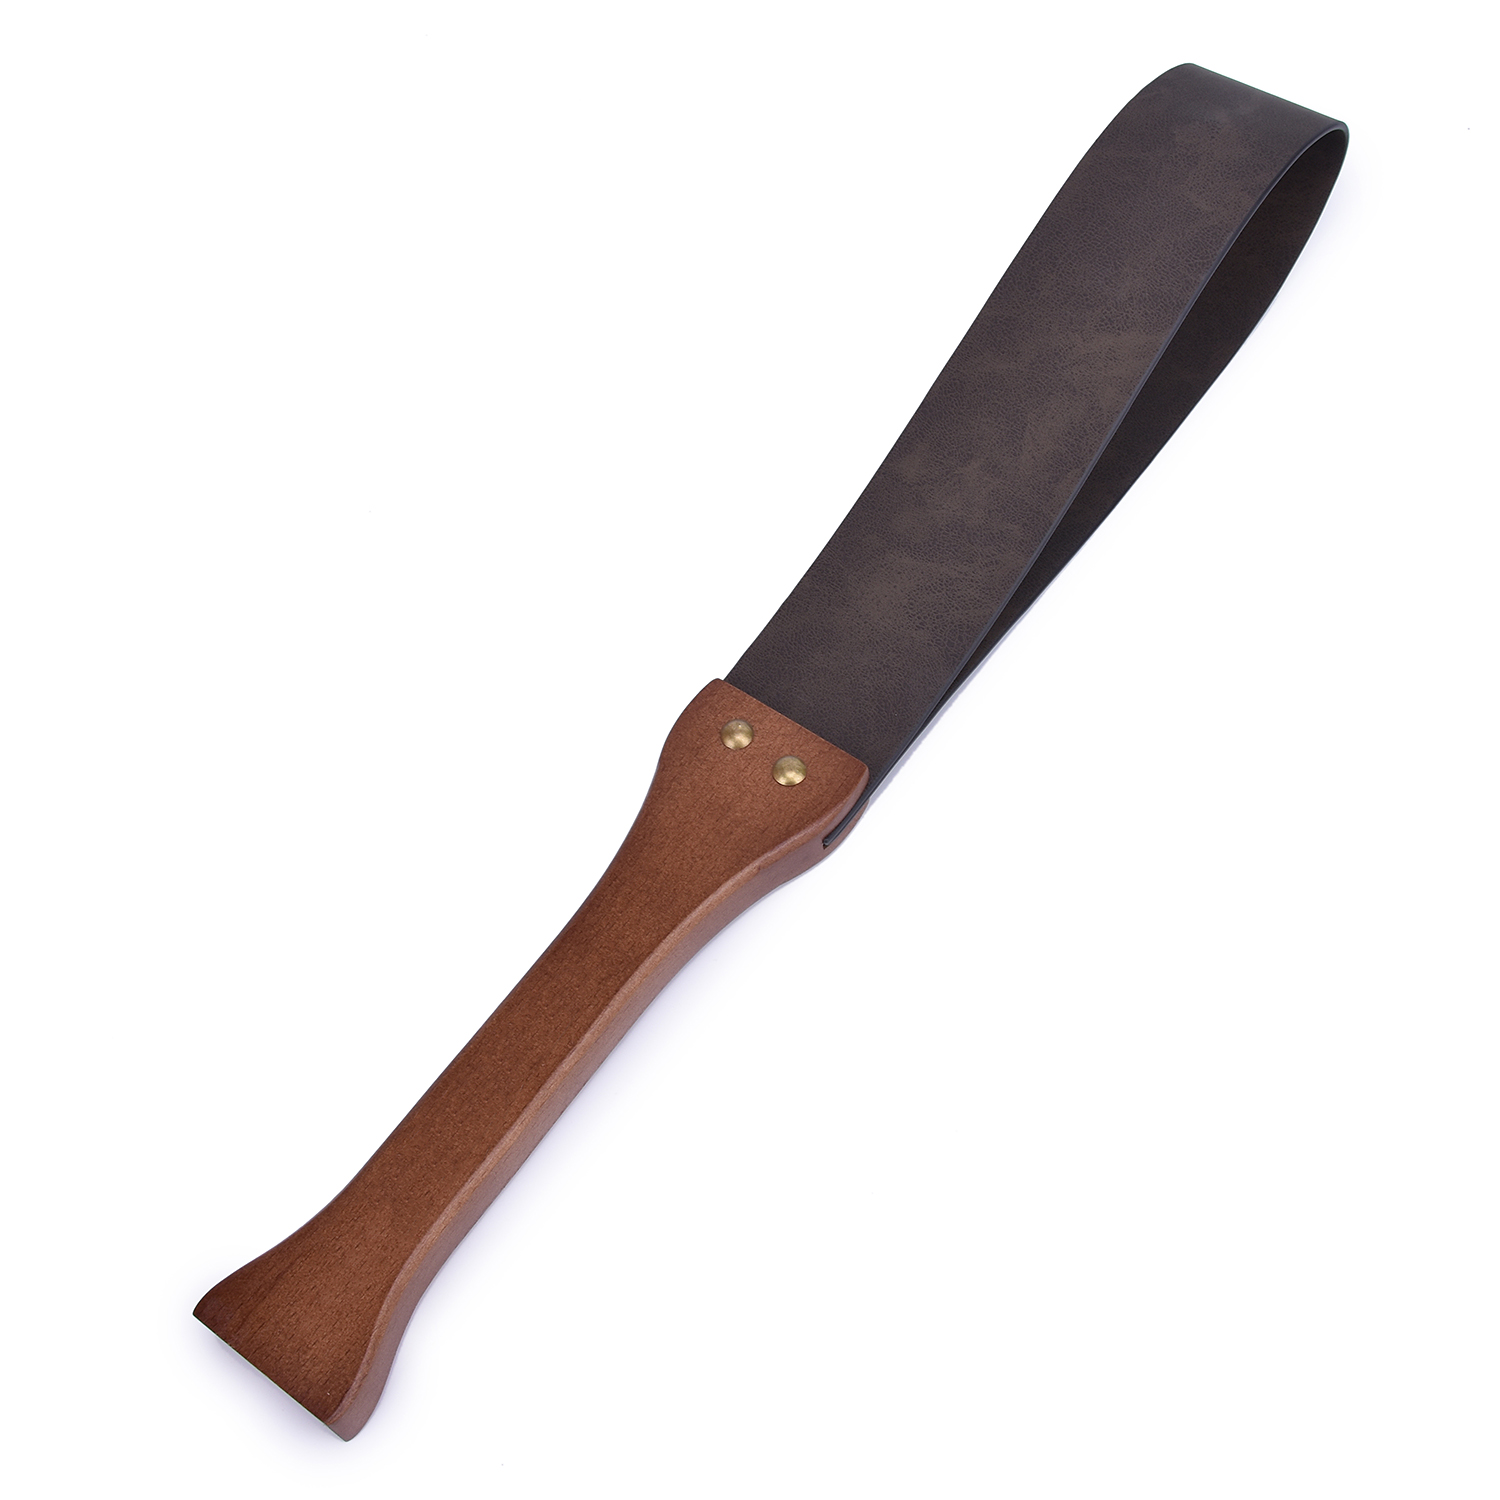 Wooden Handle Leather Spanking Paddle